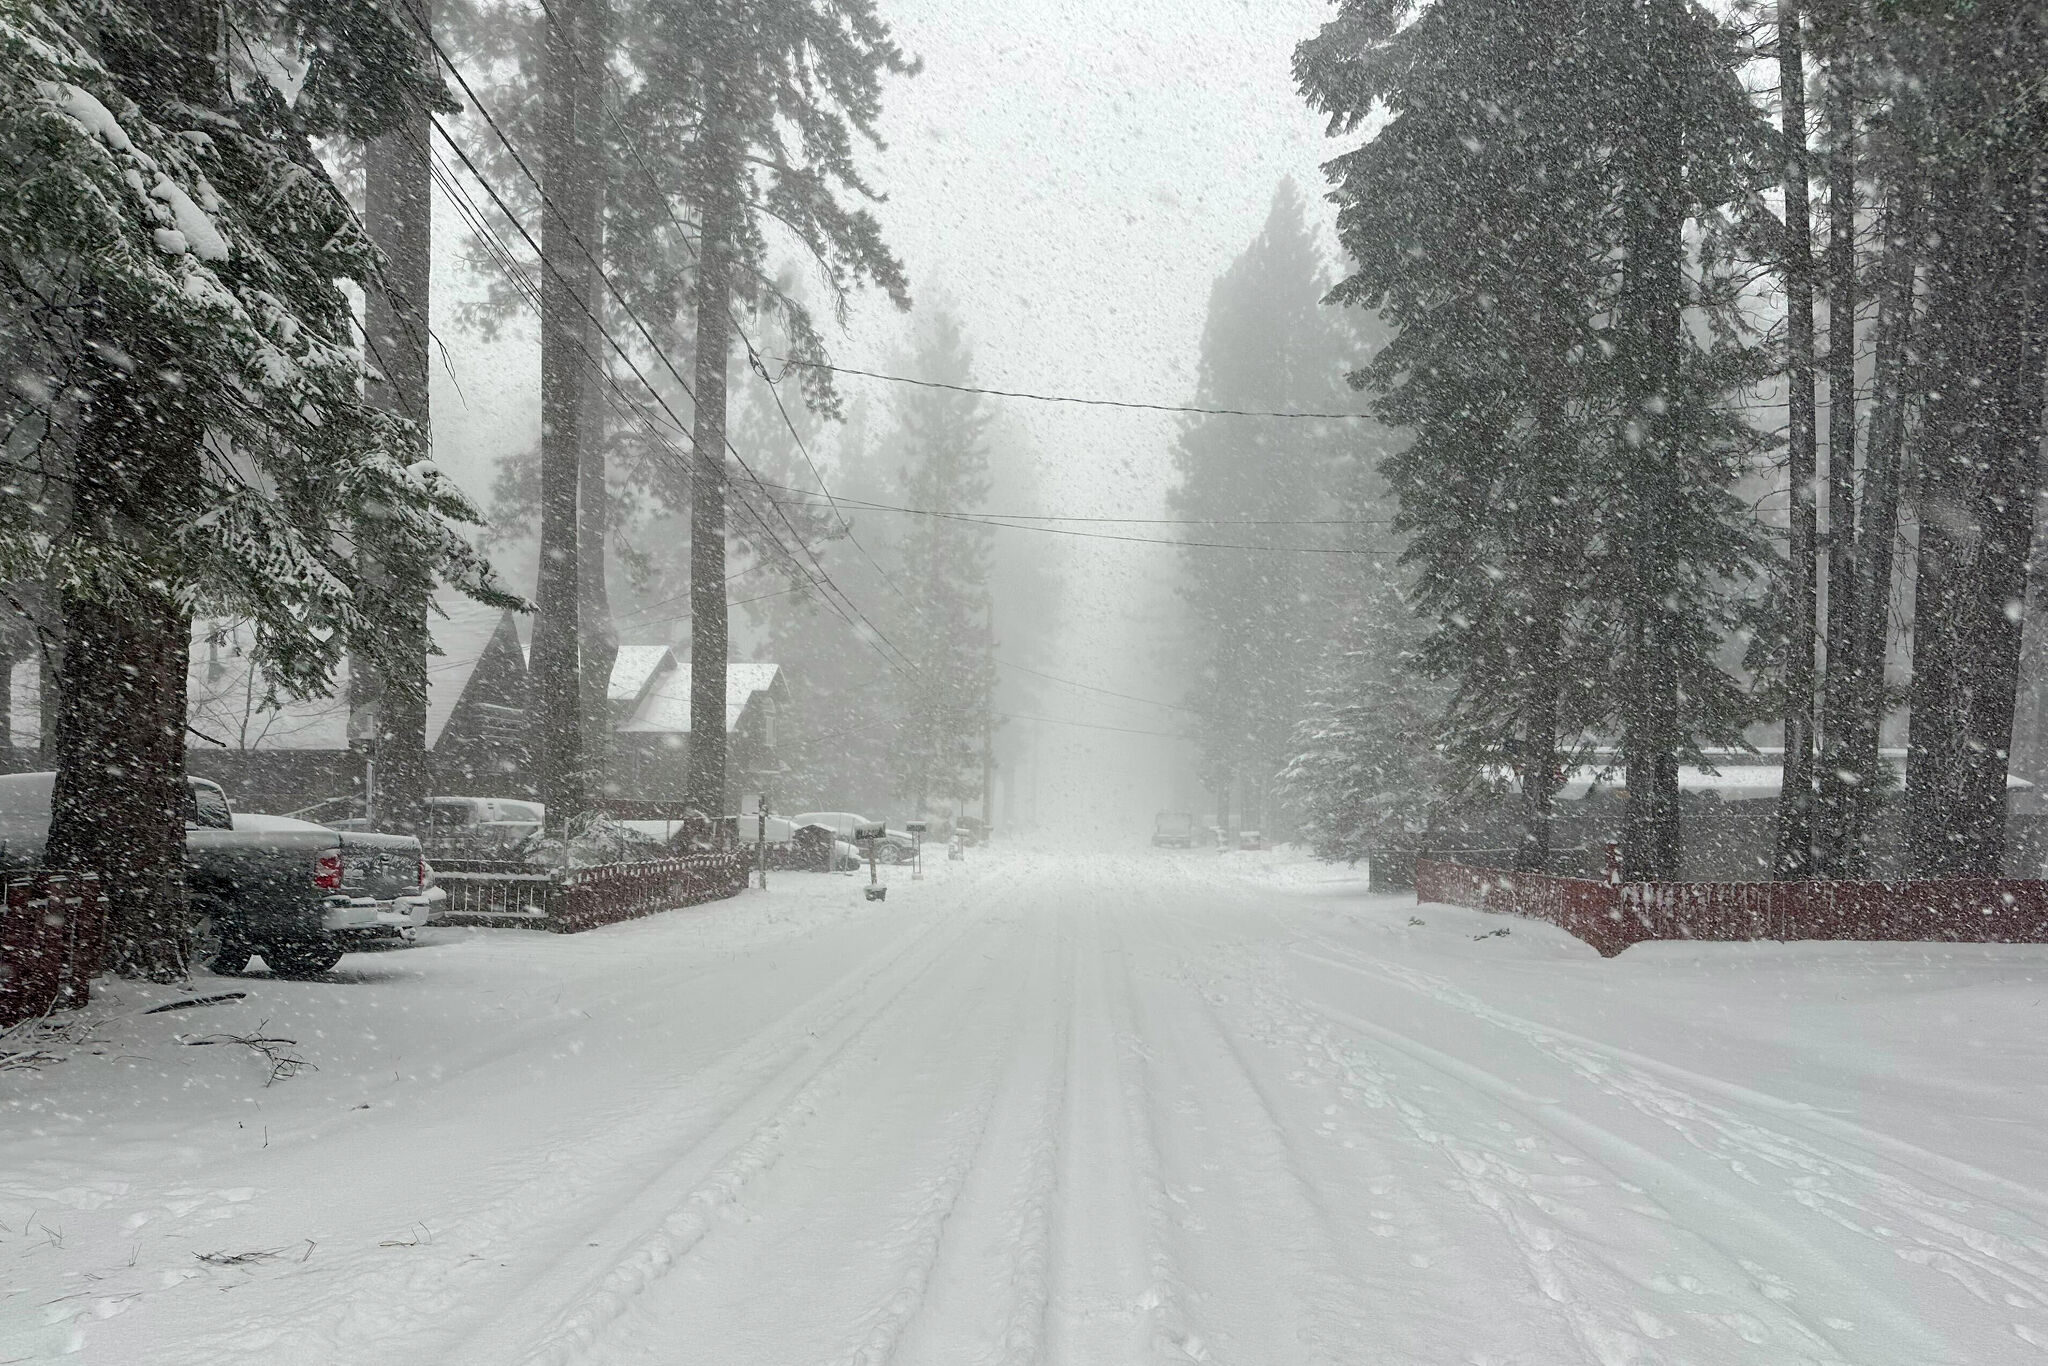 California’s I-80 set for ‘really hazardous road conditions’ as storm slams Tahoe